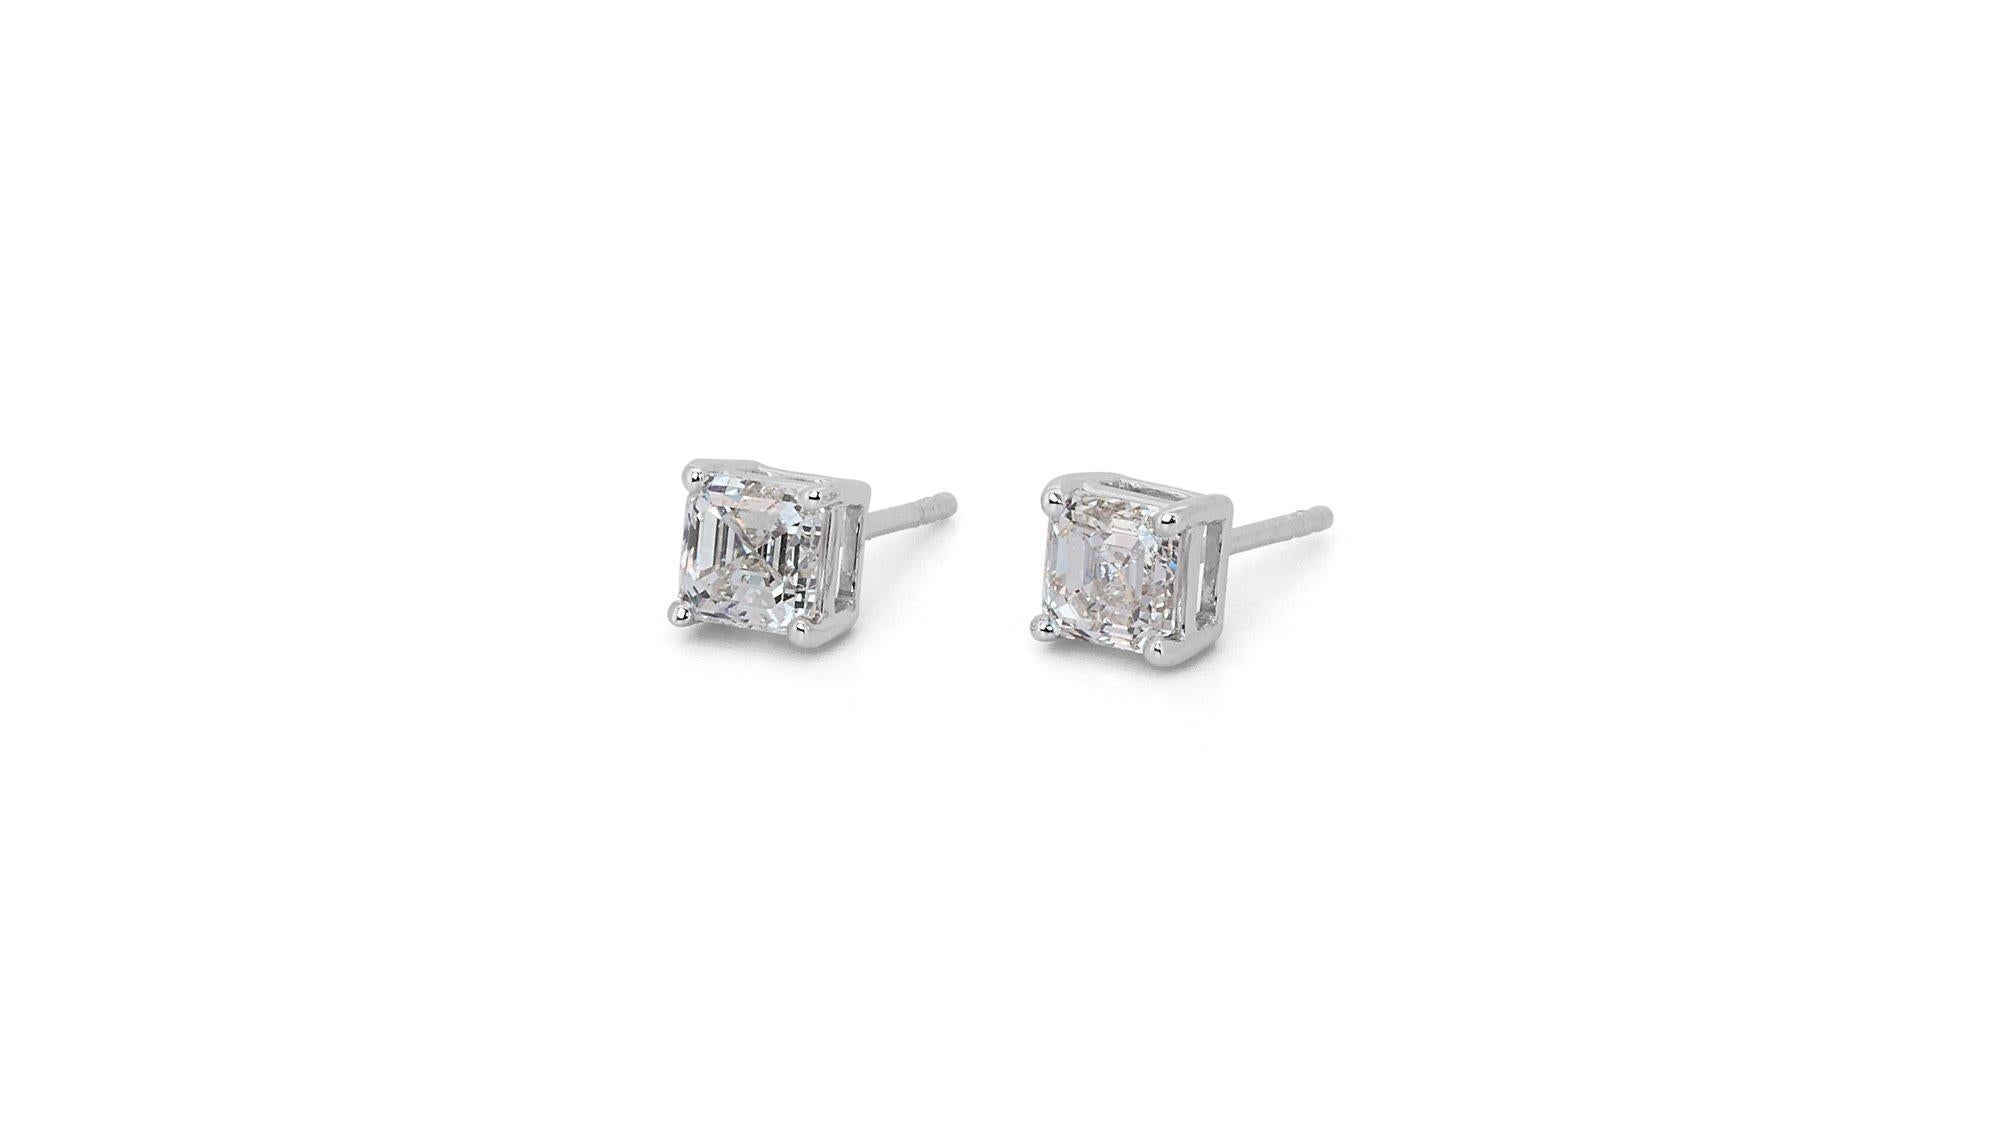 Beautiful pair of stud earrings with a dazzling 1.3 carat Asscher cut diamonds 1